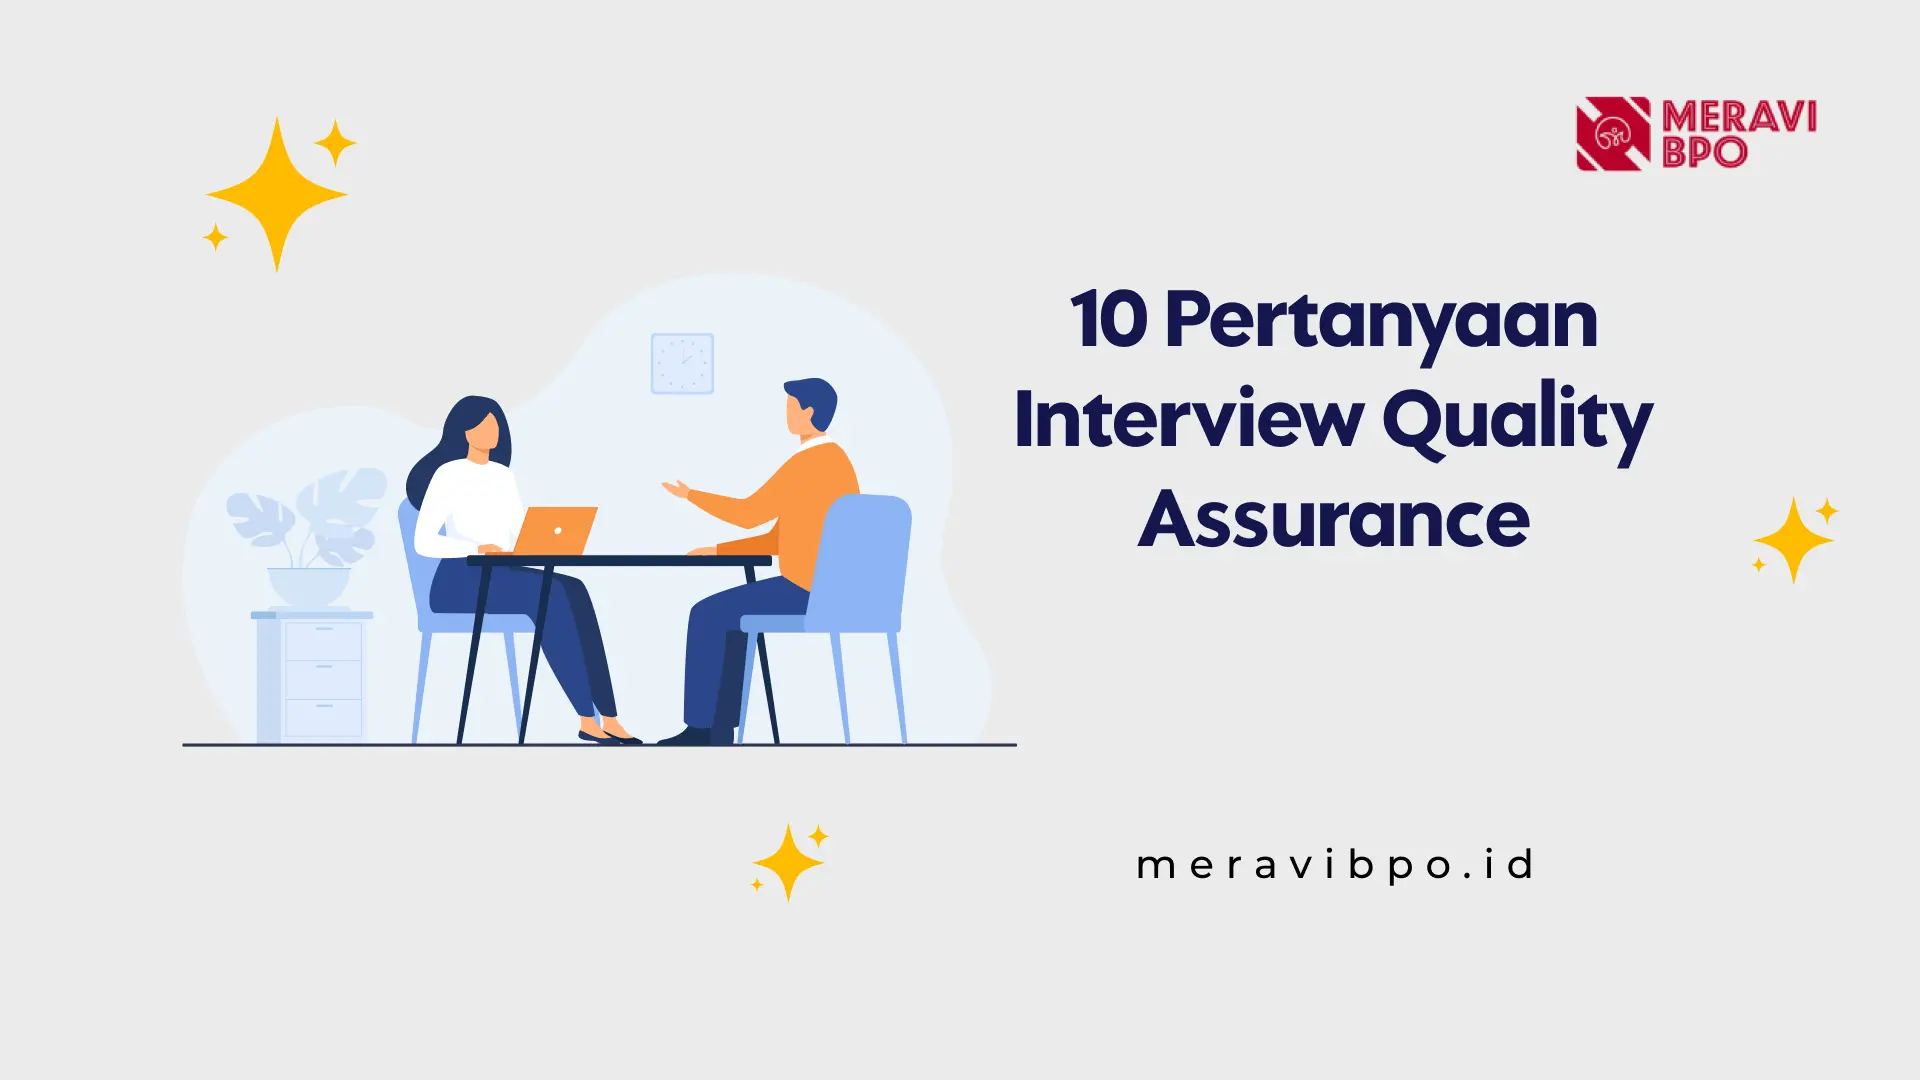 10 Pertanyaan Interview Quality Assurance